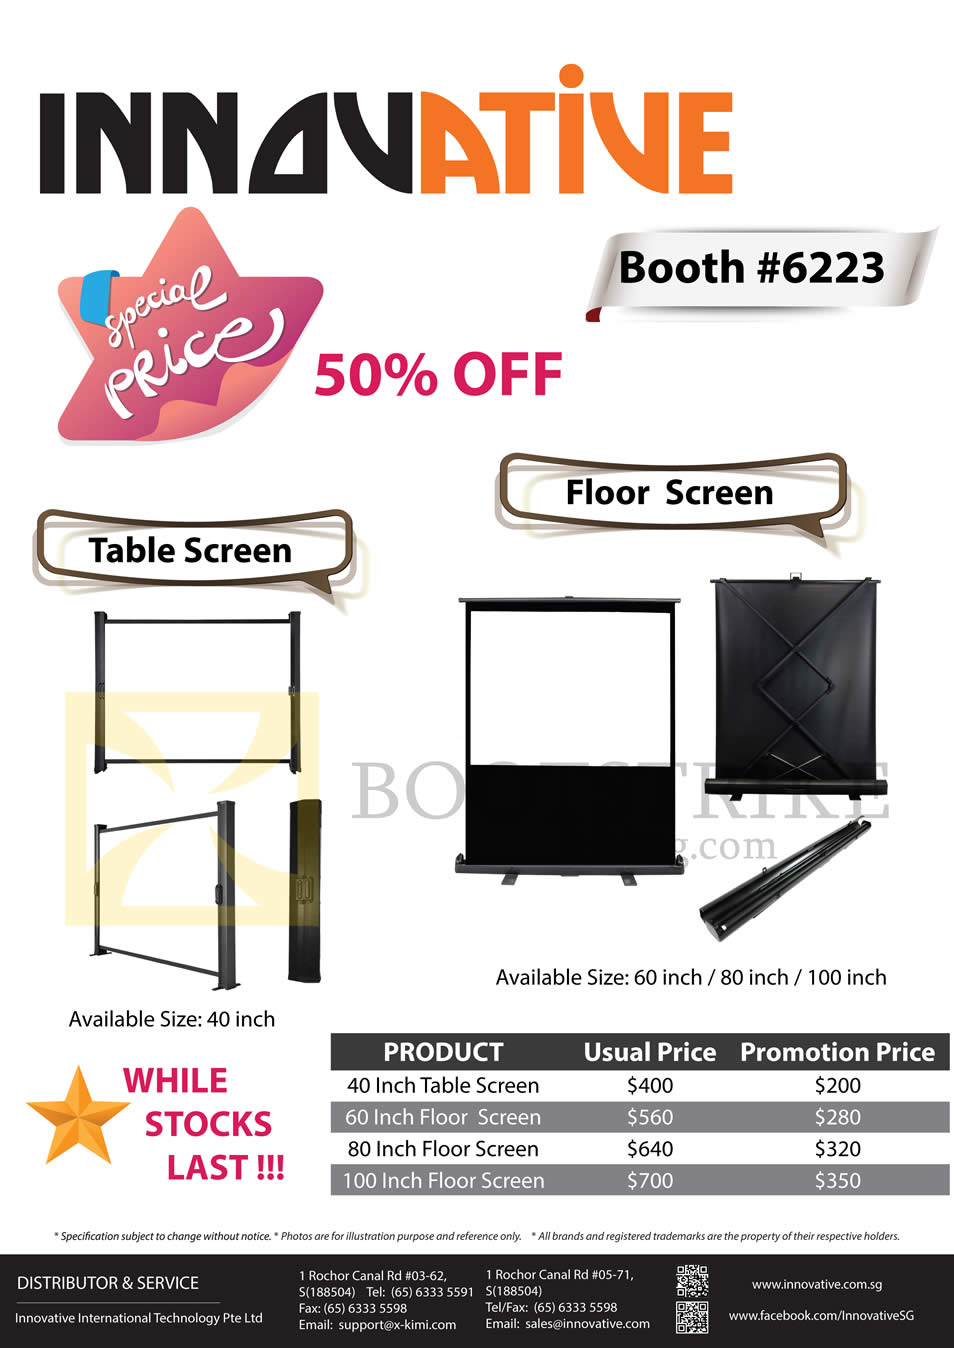 IT SHOW 2015 price list image brochure of X-Kimi Innovative Table Screen, Floor Screen